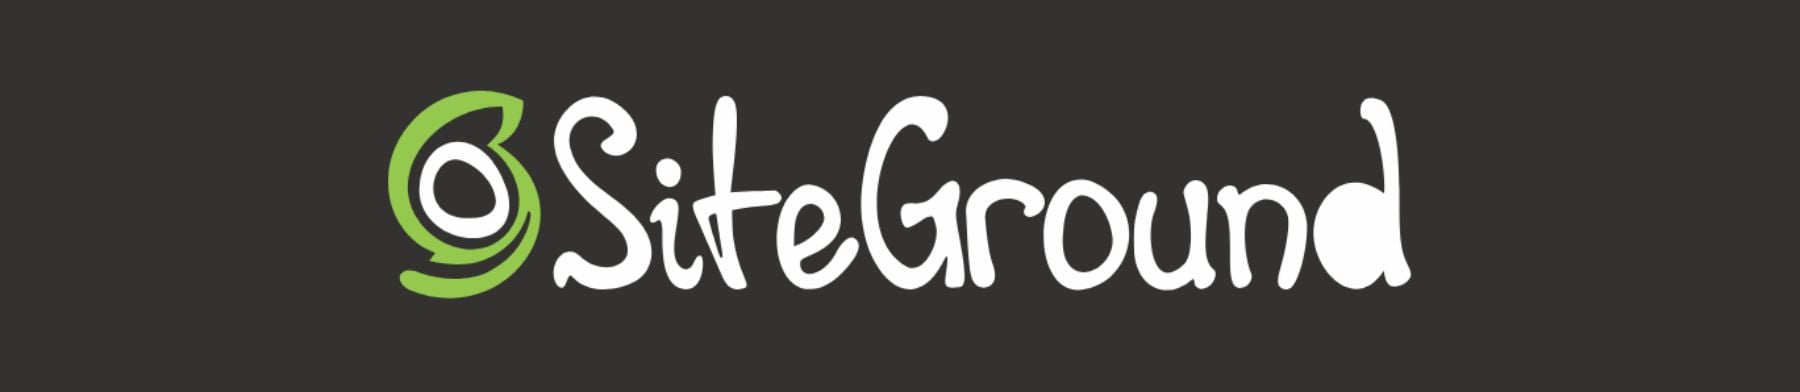 Siteground Logo Mark - White on Dark BG